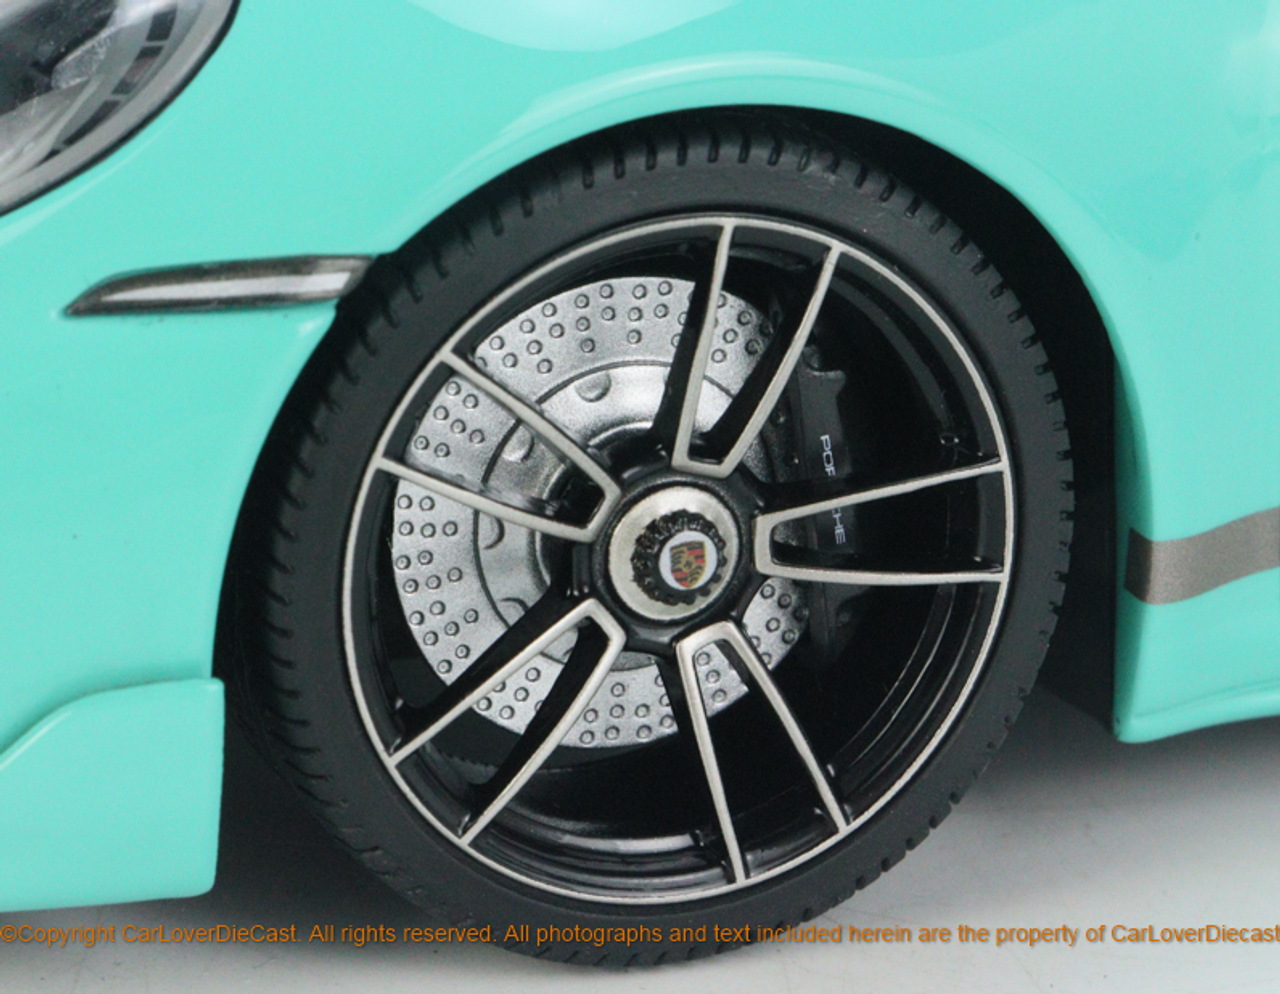 1/18 Minichamps 2021 Porsche 911 (992) Turbo S Coupe Sport Design 20th Anniversary Edition (Mint Blue) Full Open Diecast Car Model Limited 500 Pieces